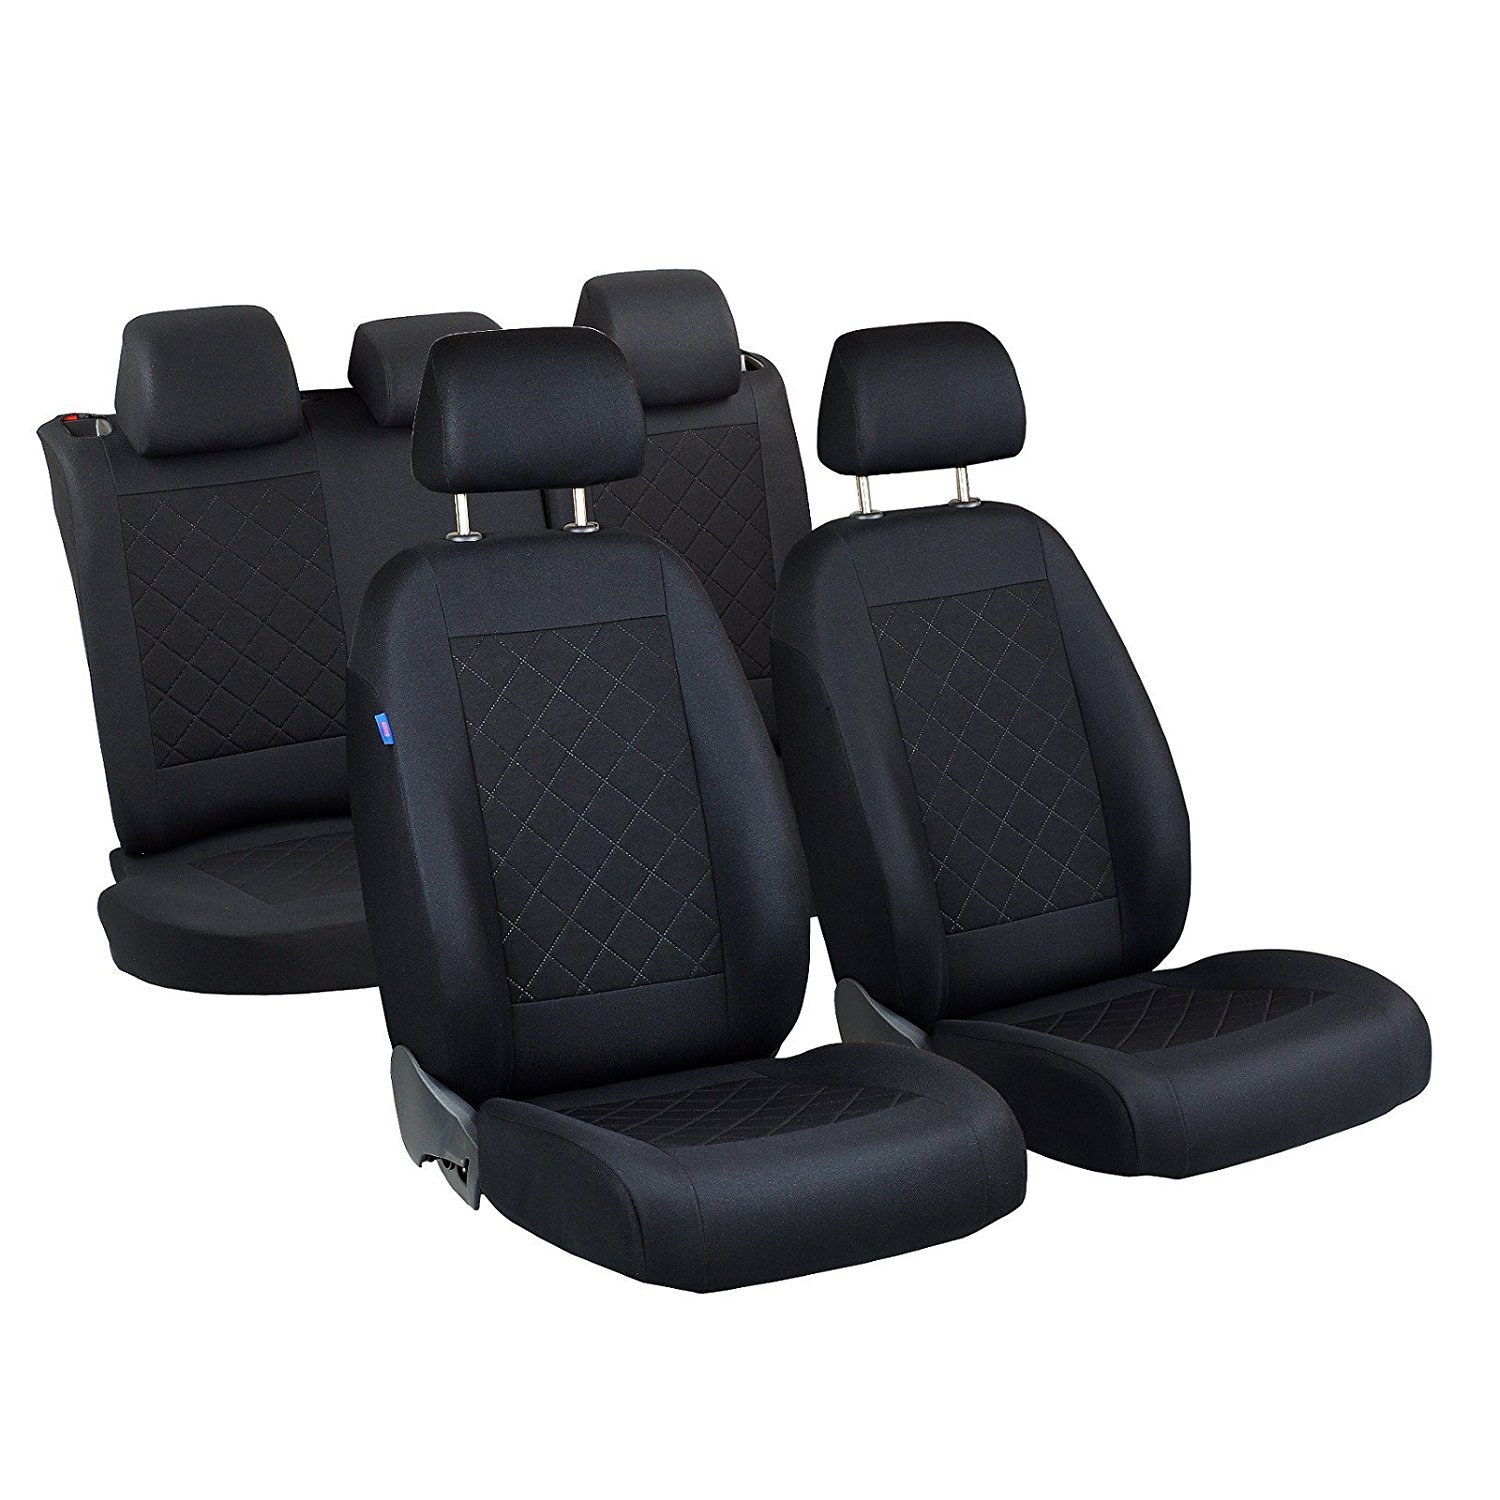 Auris Sitzbezüge - 1 Set - Farbe Premium Schwarz gepresstes Karomuster